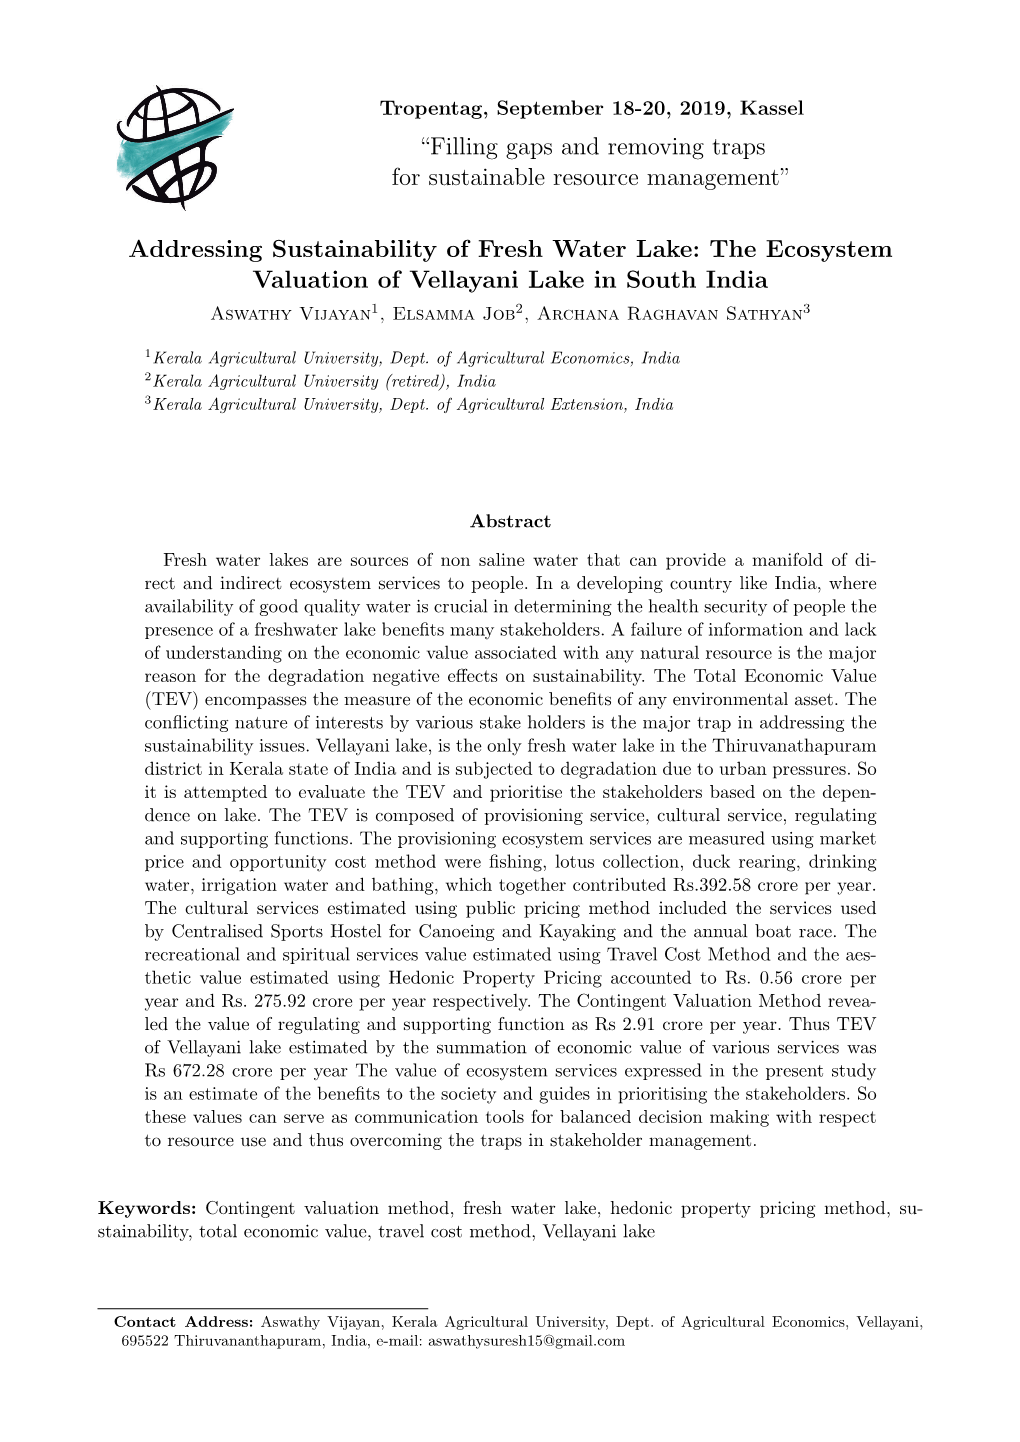 Addressing Sustainability of Fresh Water Lake: the Ecosystem Valuation of Vellayani Lake in South India Aswathy Vijayan1, Elsamma Job2, Archana Raghavan Sathyan3